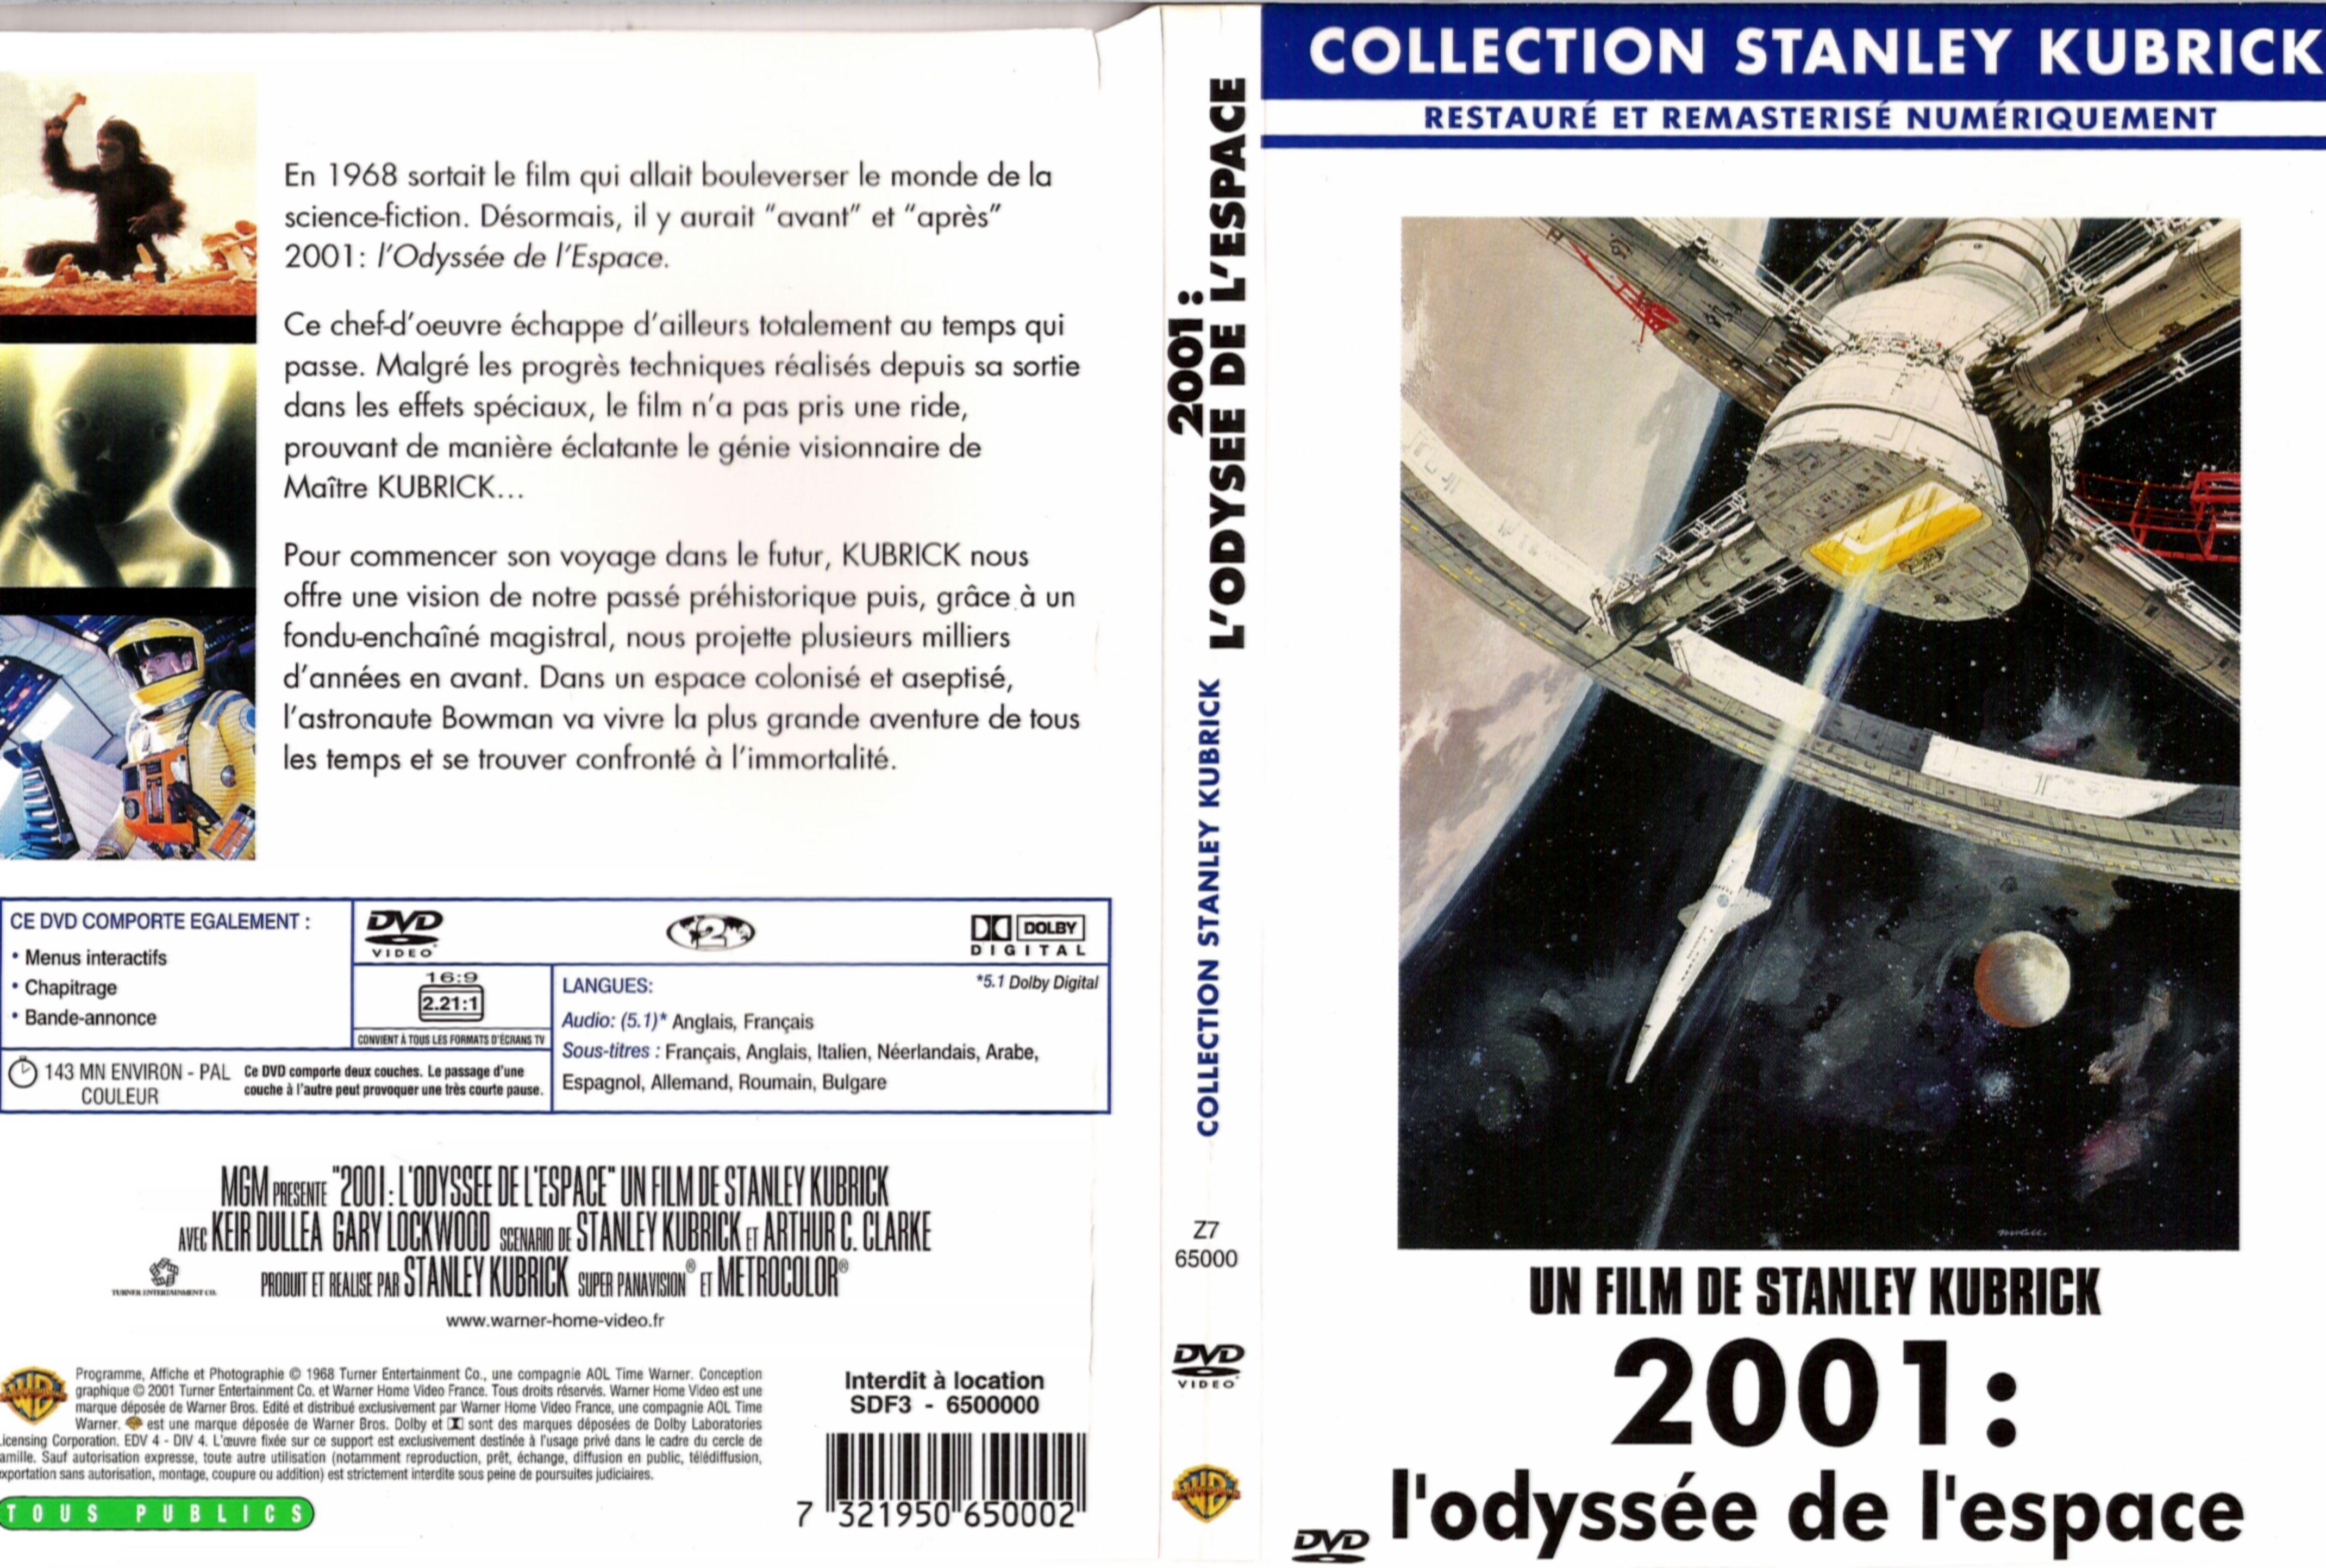 2001 : L'odyssée de L'espace